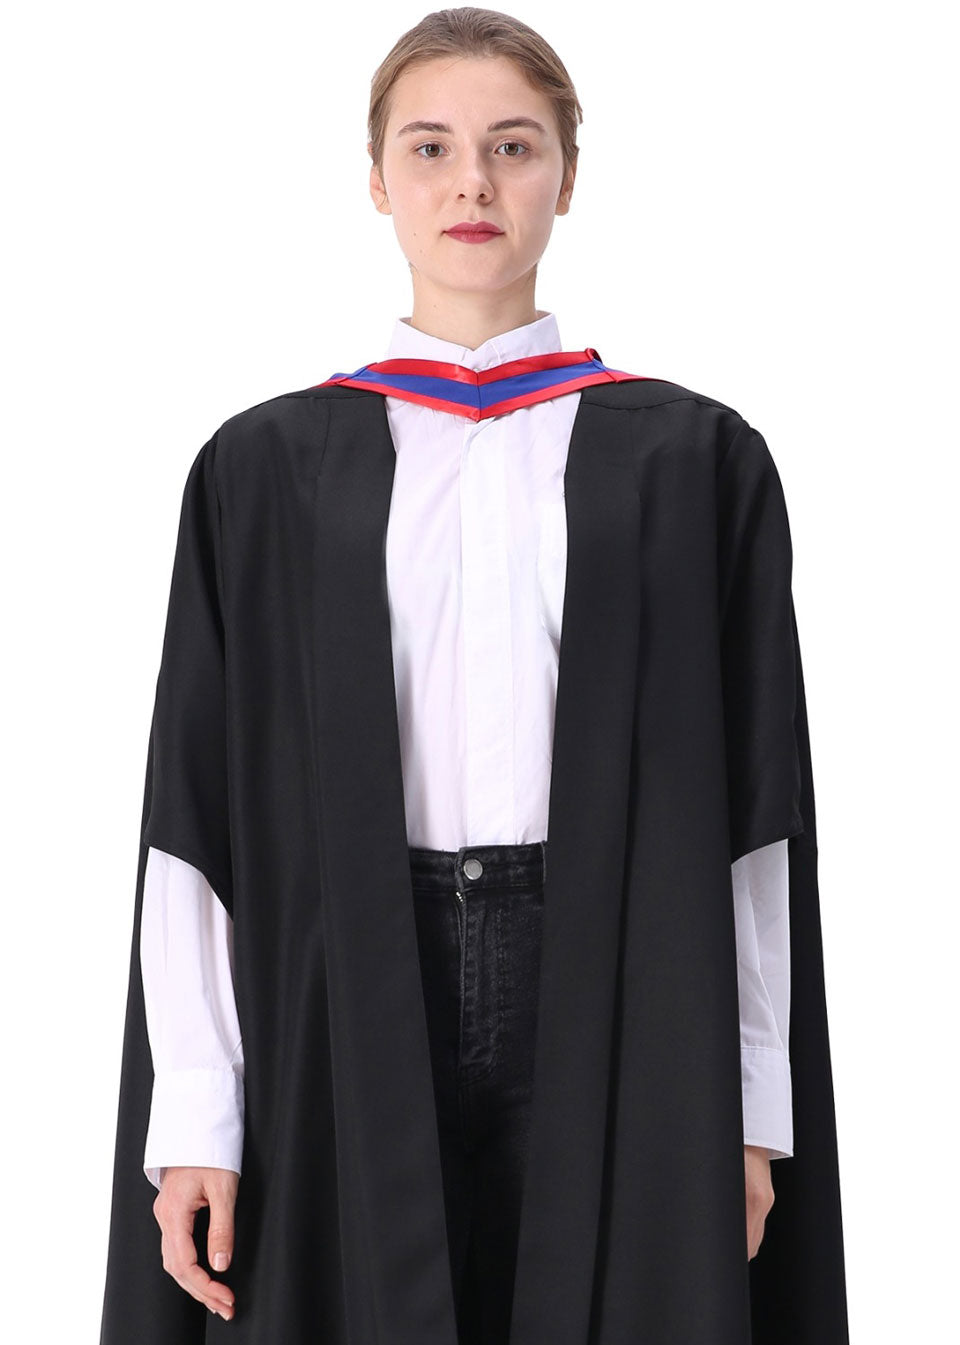 Custom UK Style Graduation Academic Hood